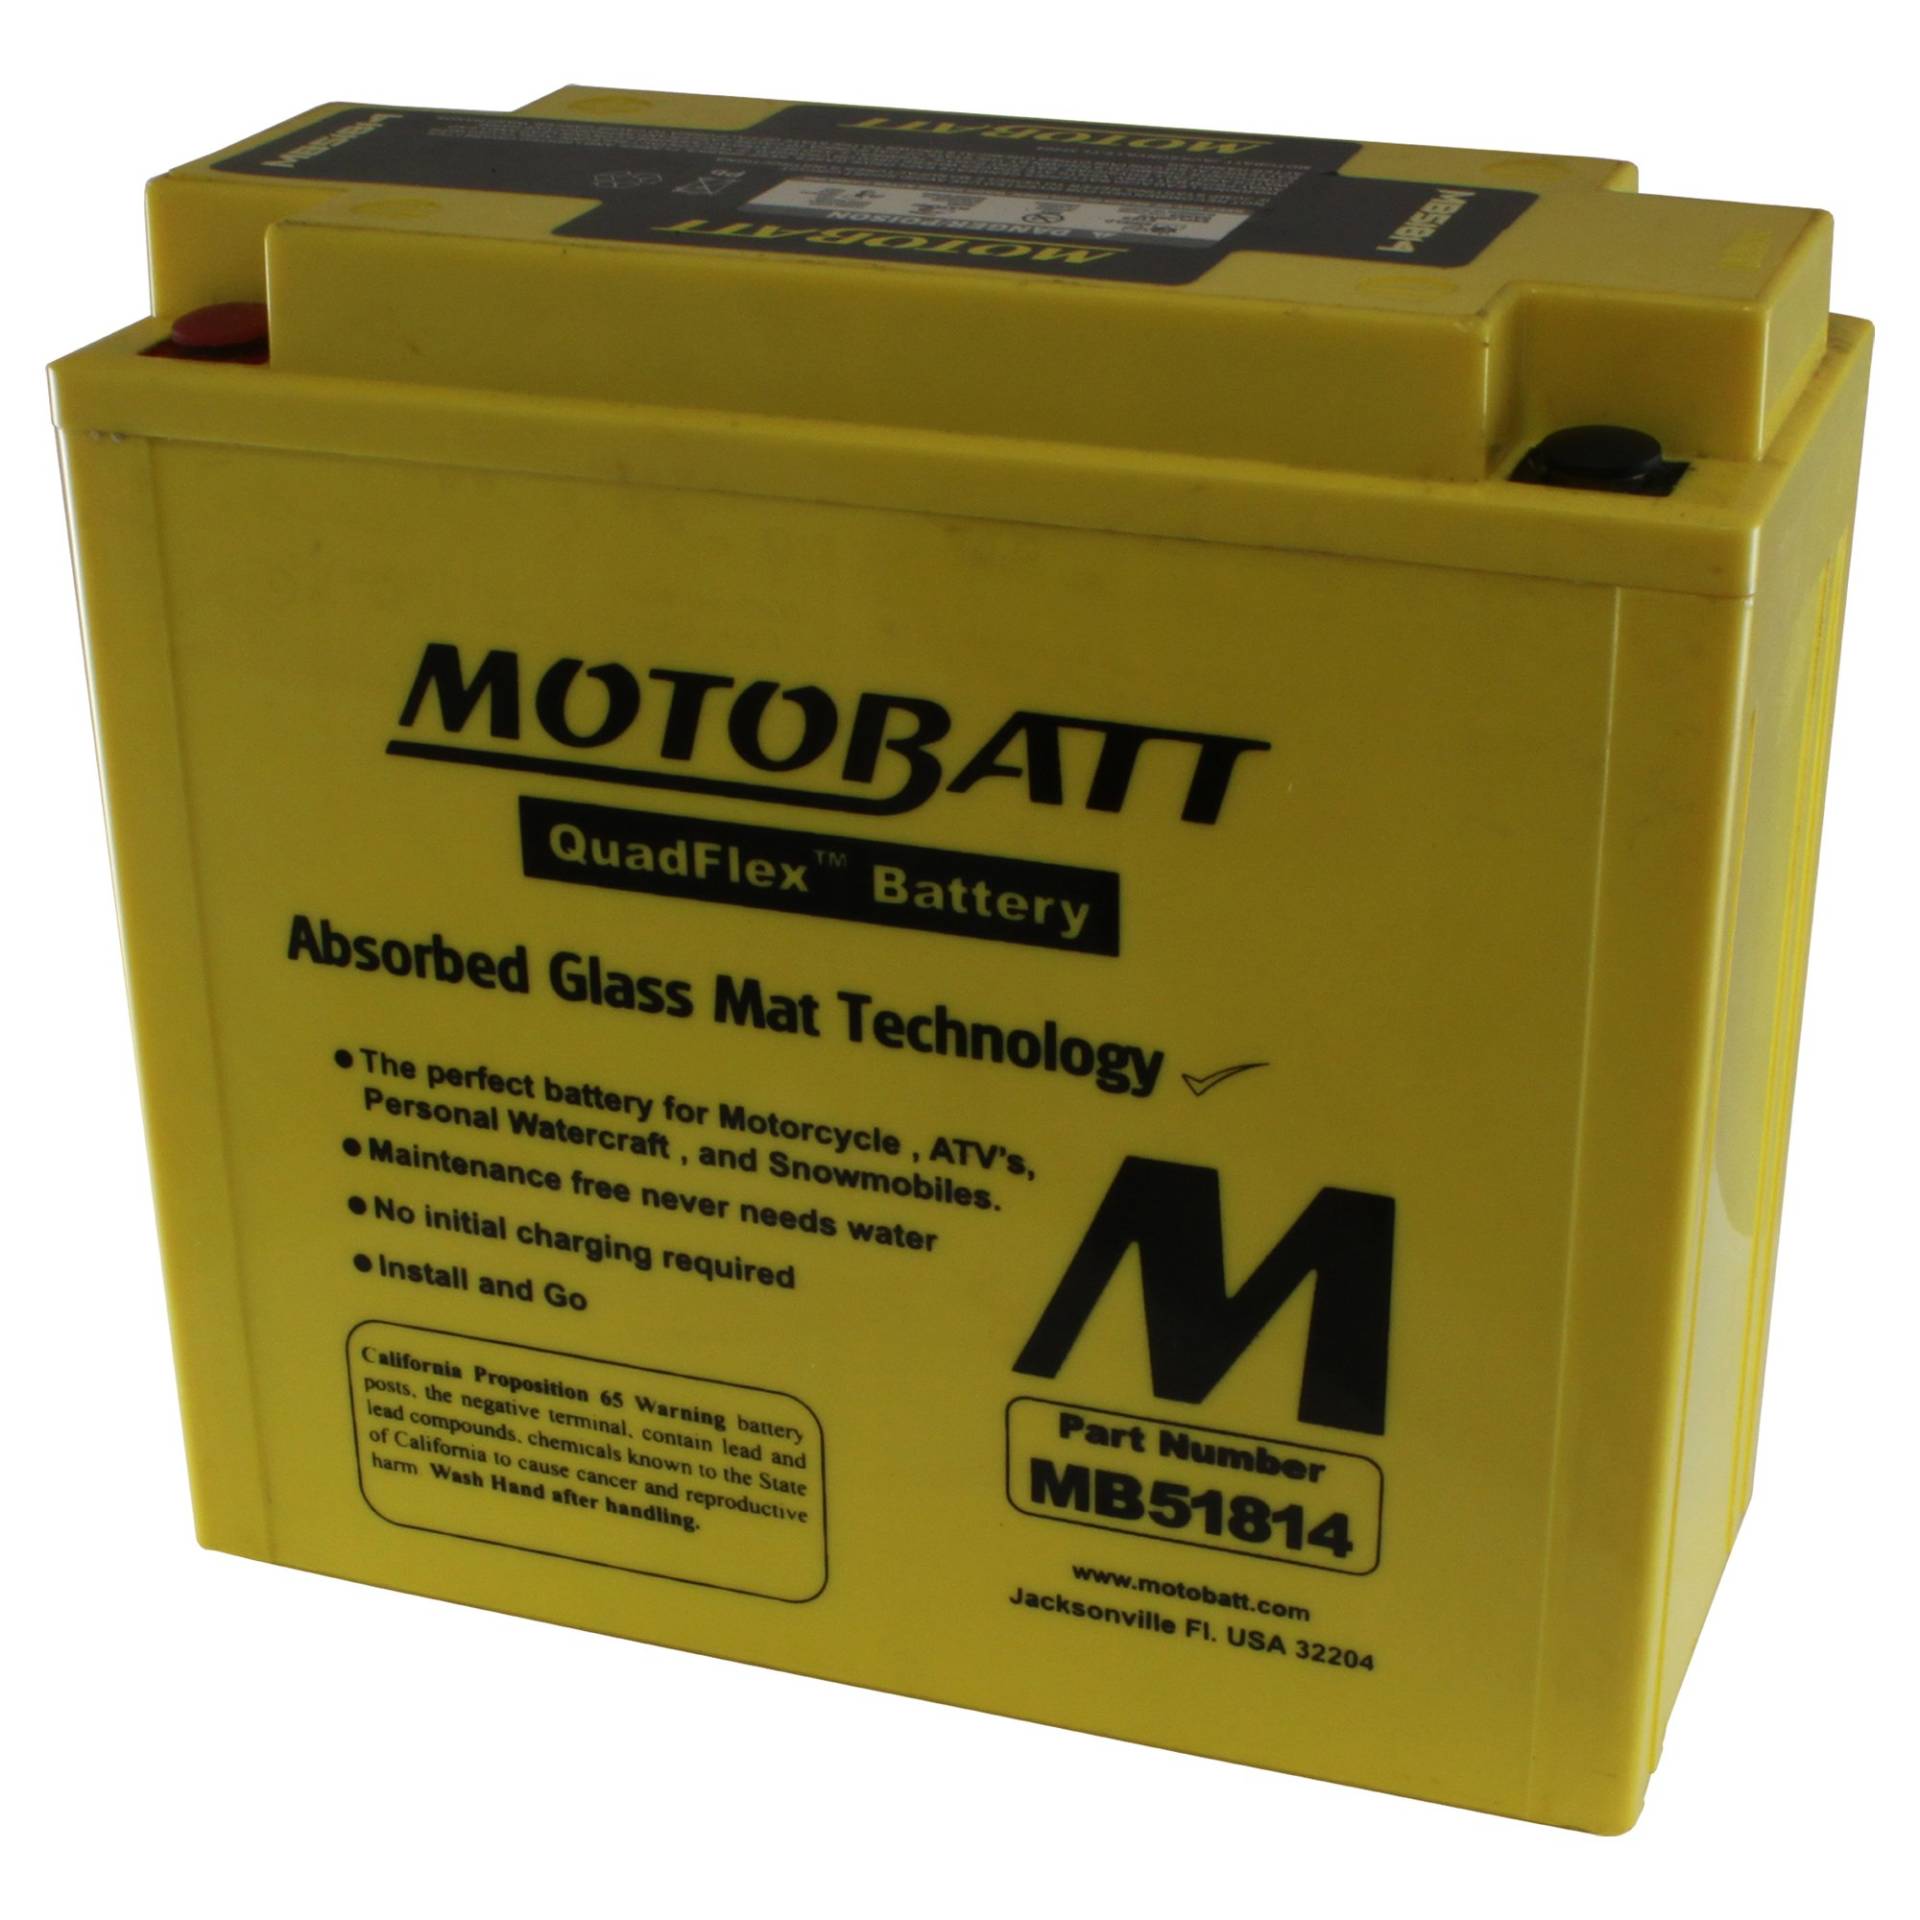 MotoBatt MB51814 (12V 22 Amp) 260CCA Factory Activated QuadFlex AGM Battery von MOTOBATT